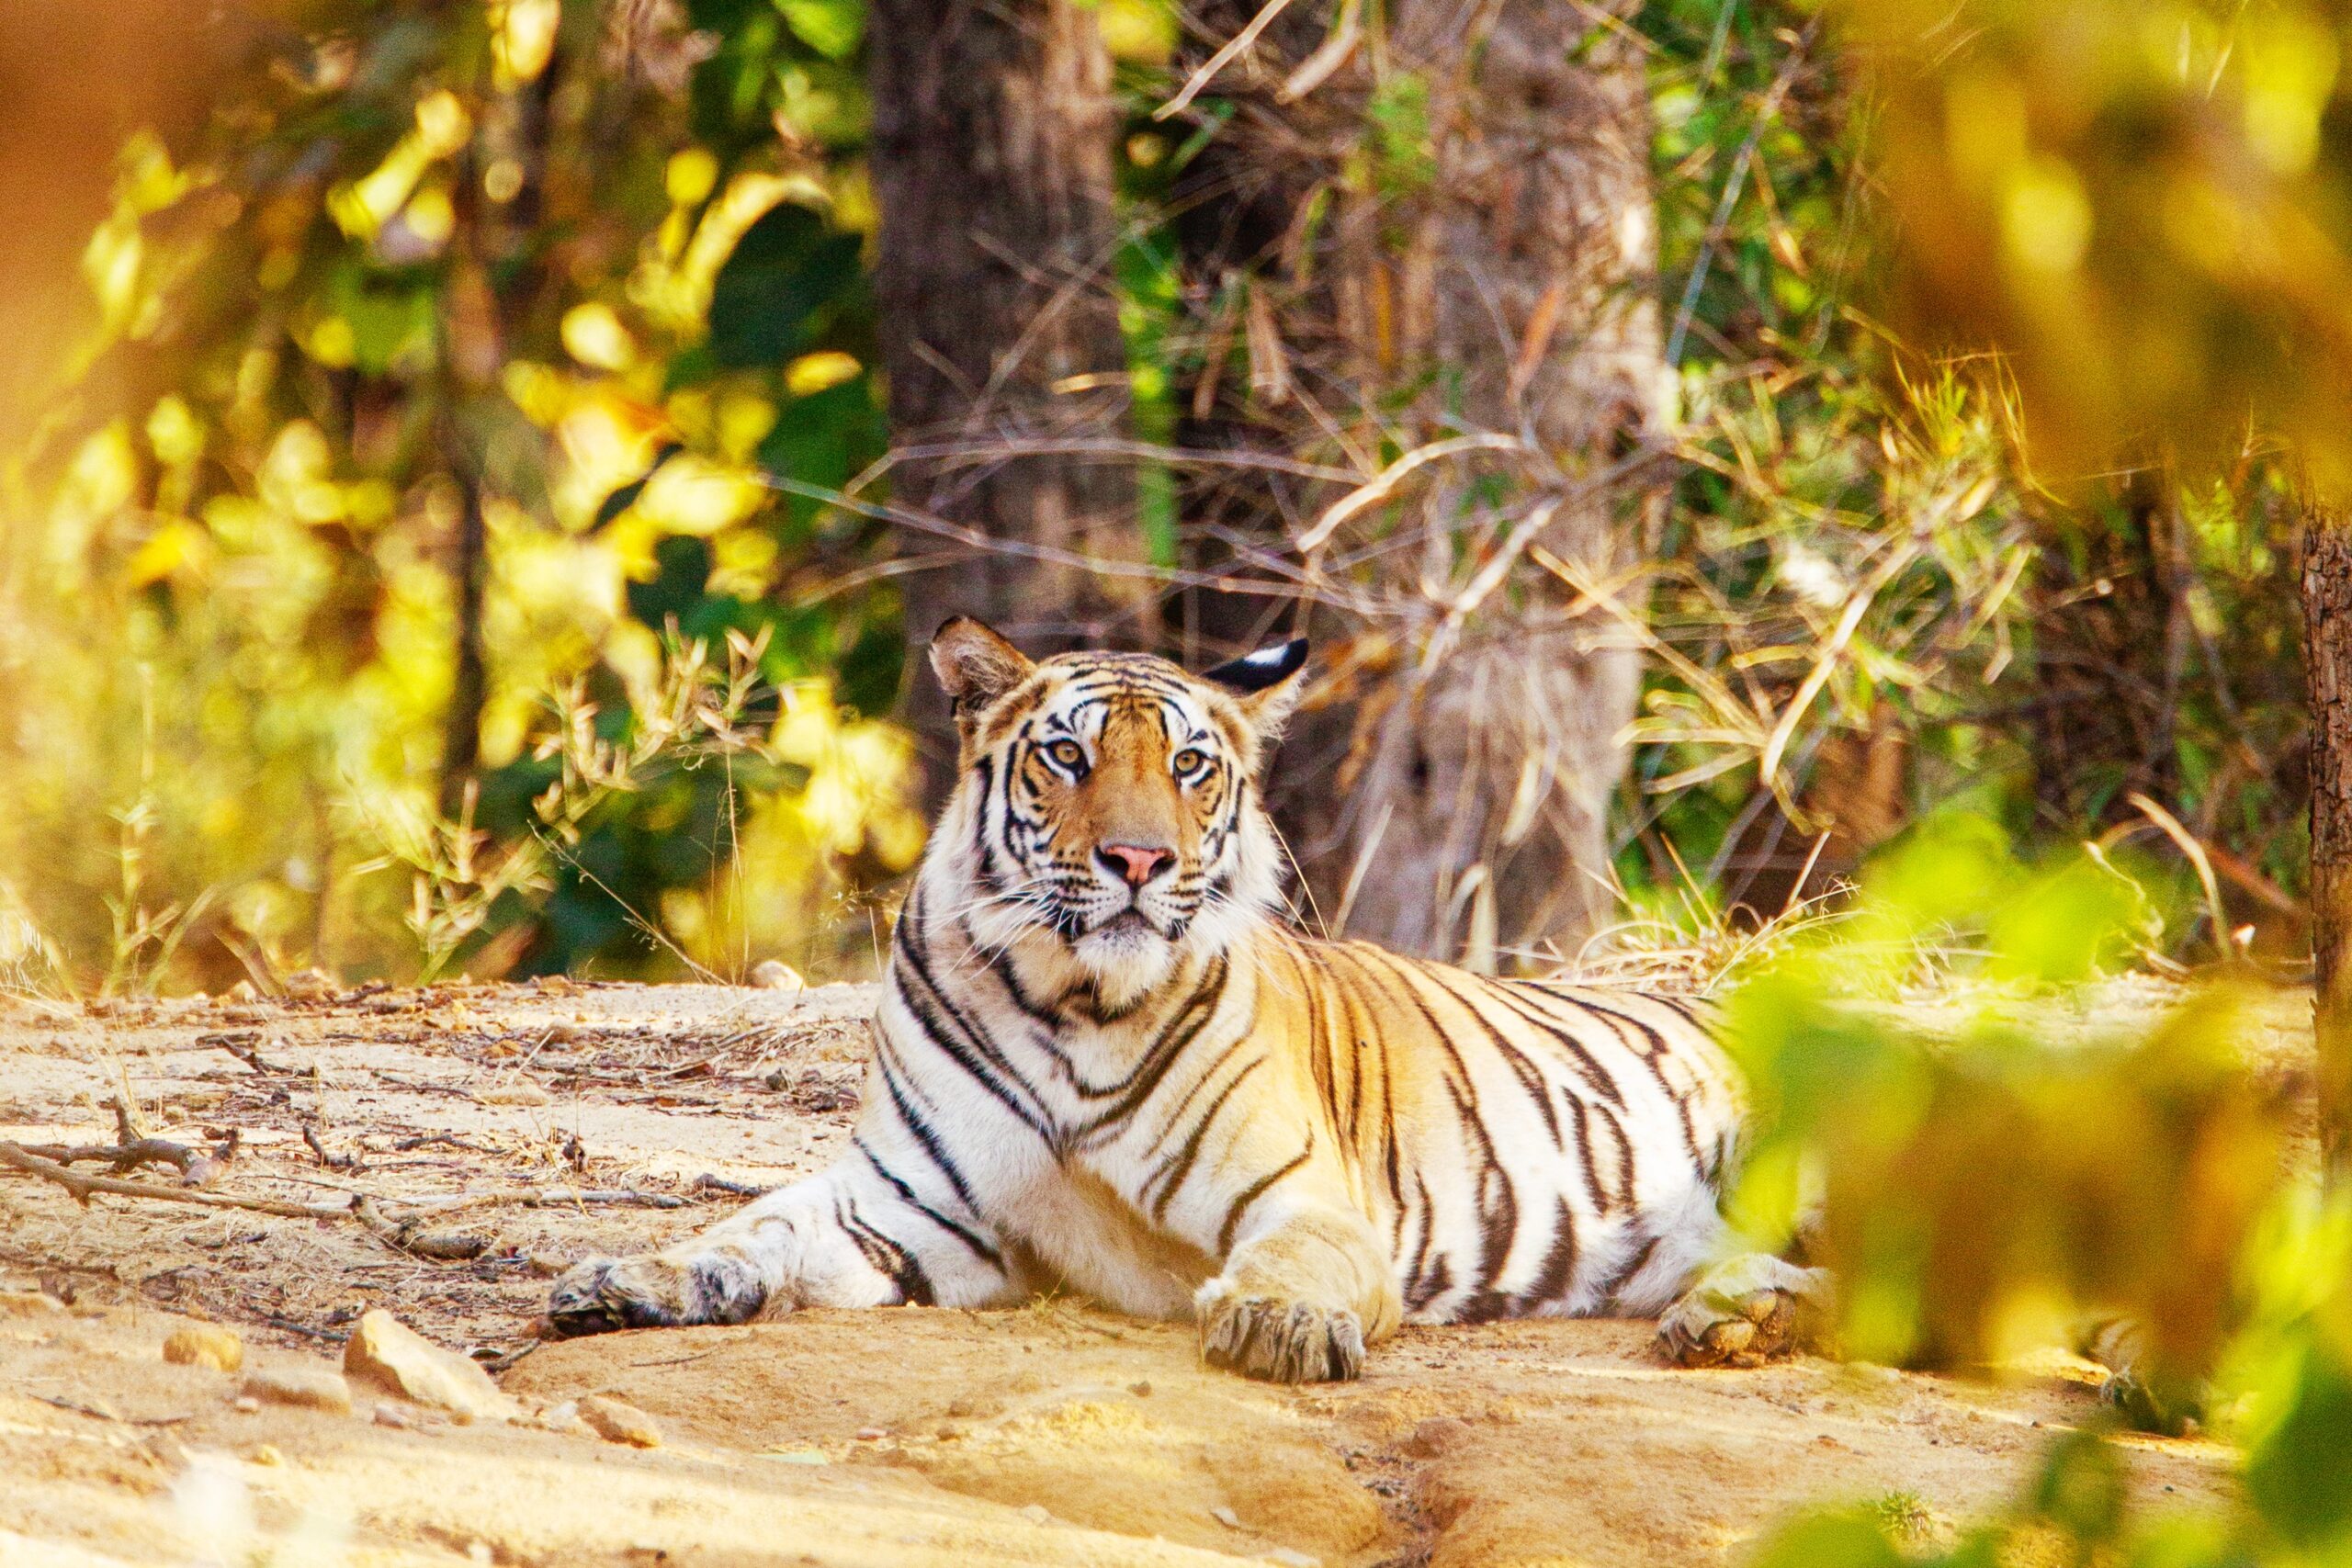 <img src="bengal tiger.jpg" alt="bengal tiger at Rathambore National Park"/>